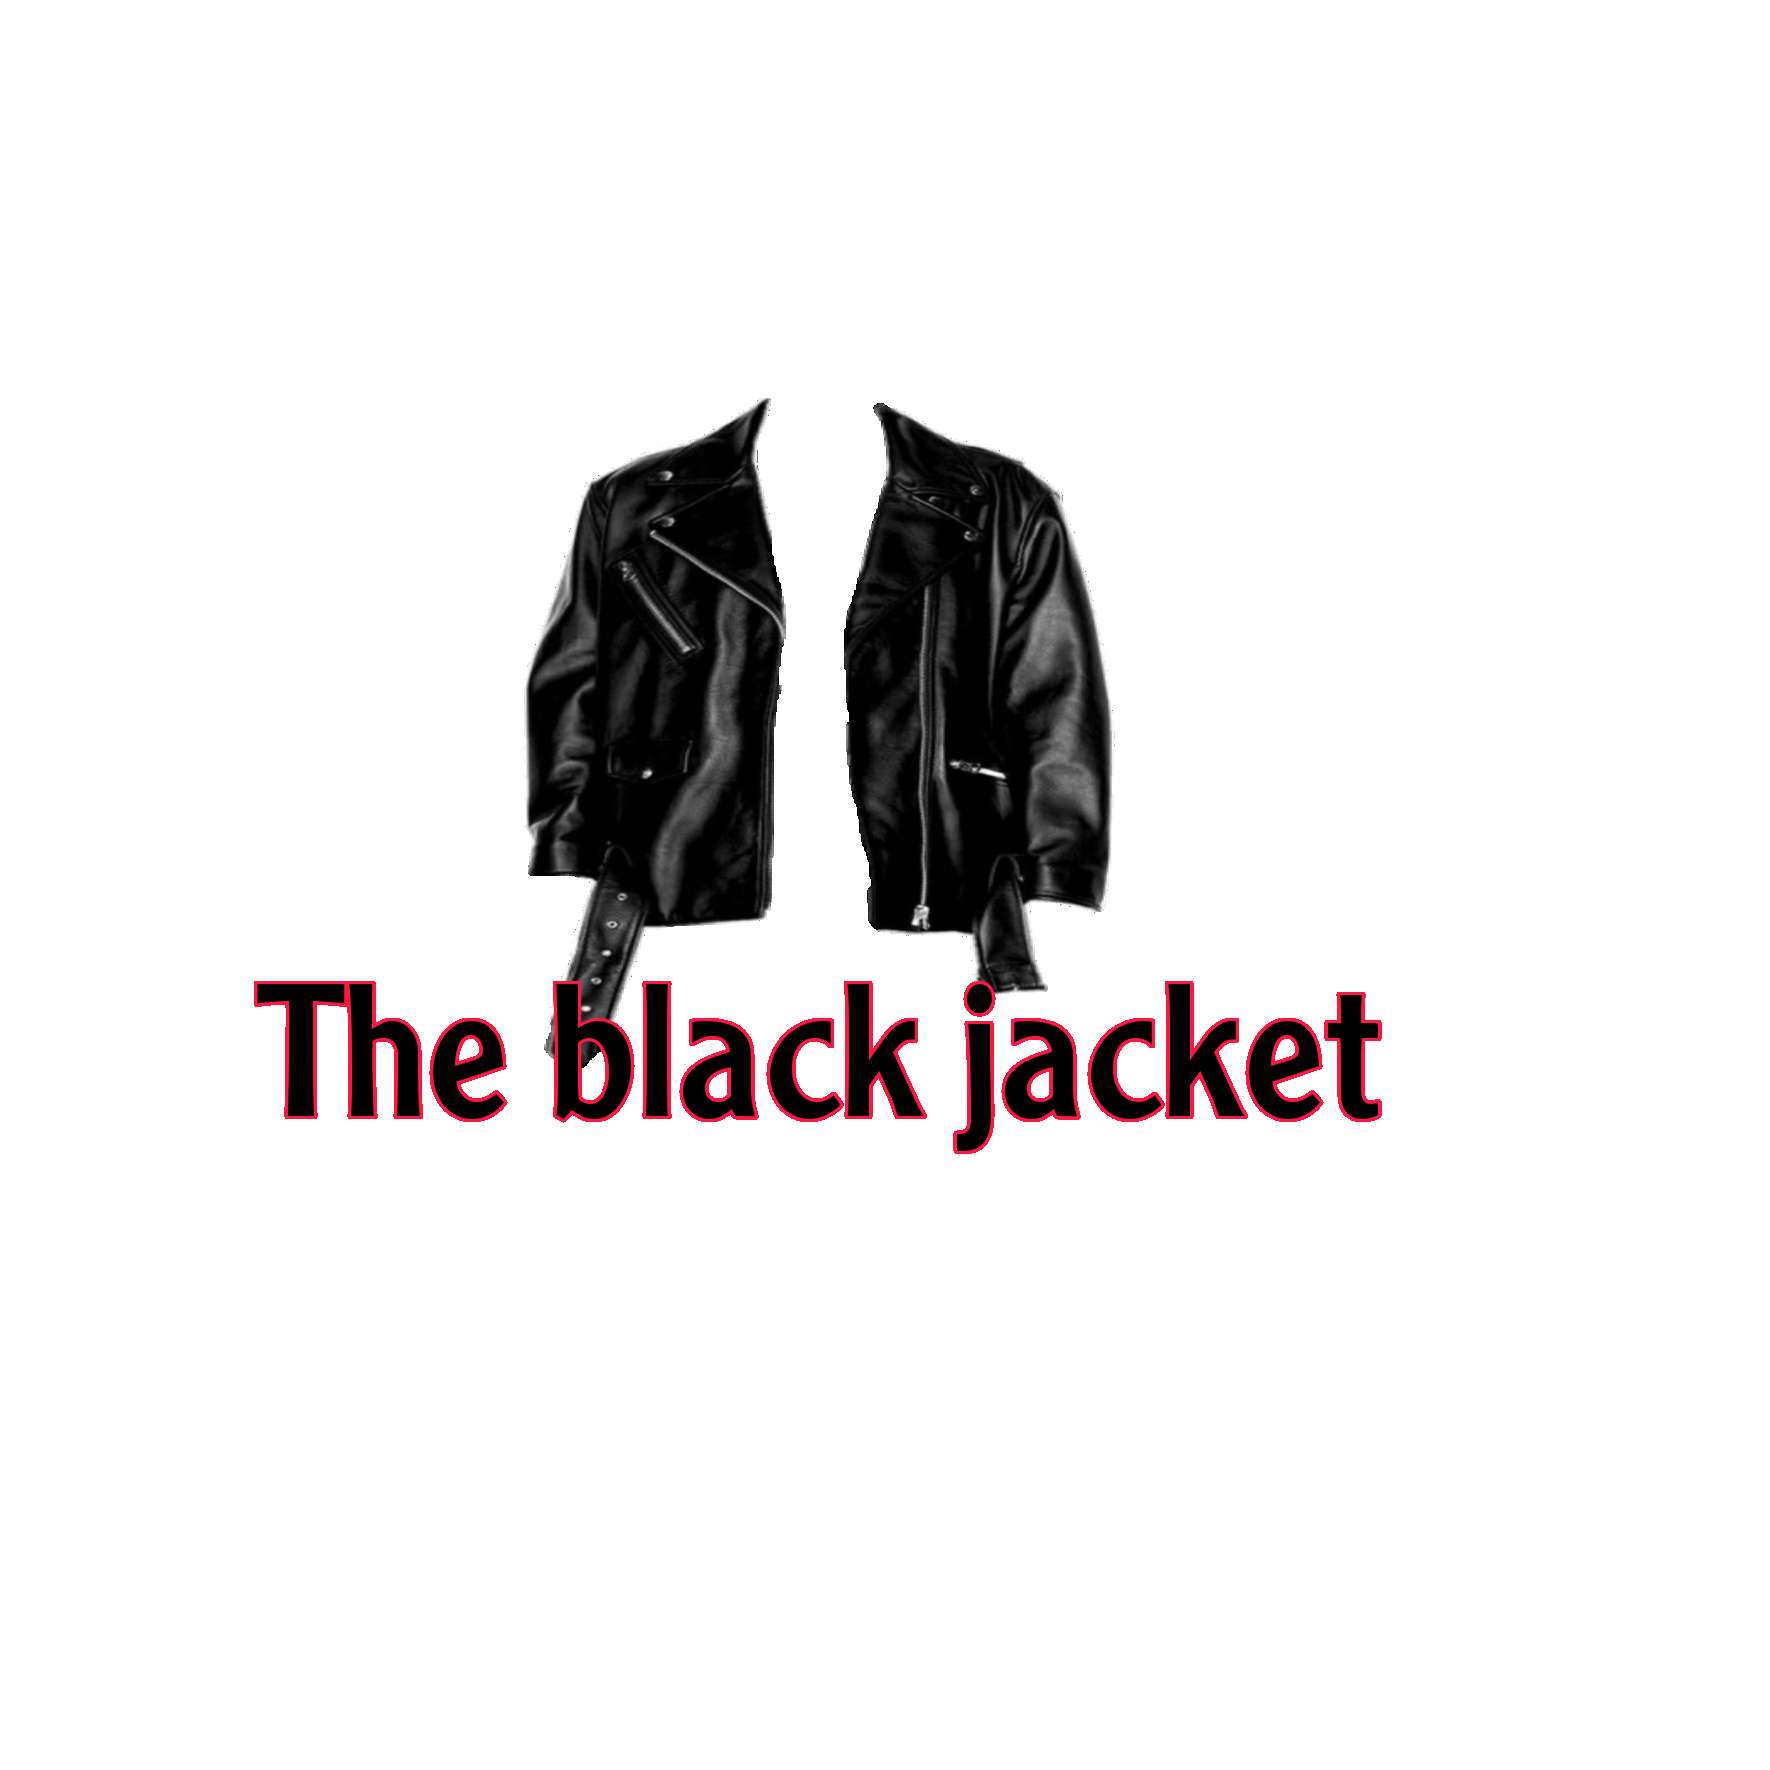 The black jacket